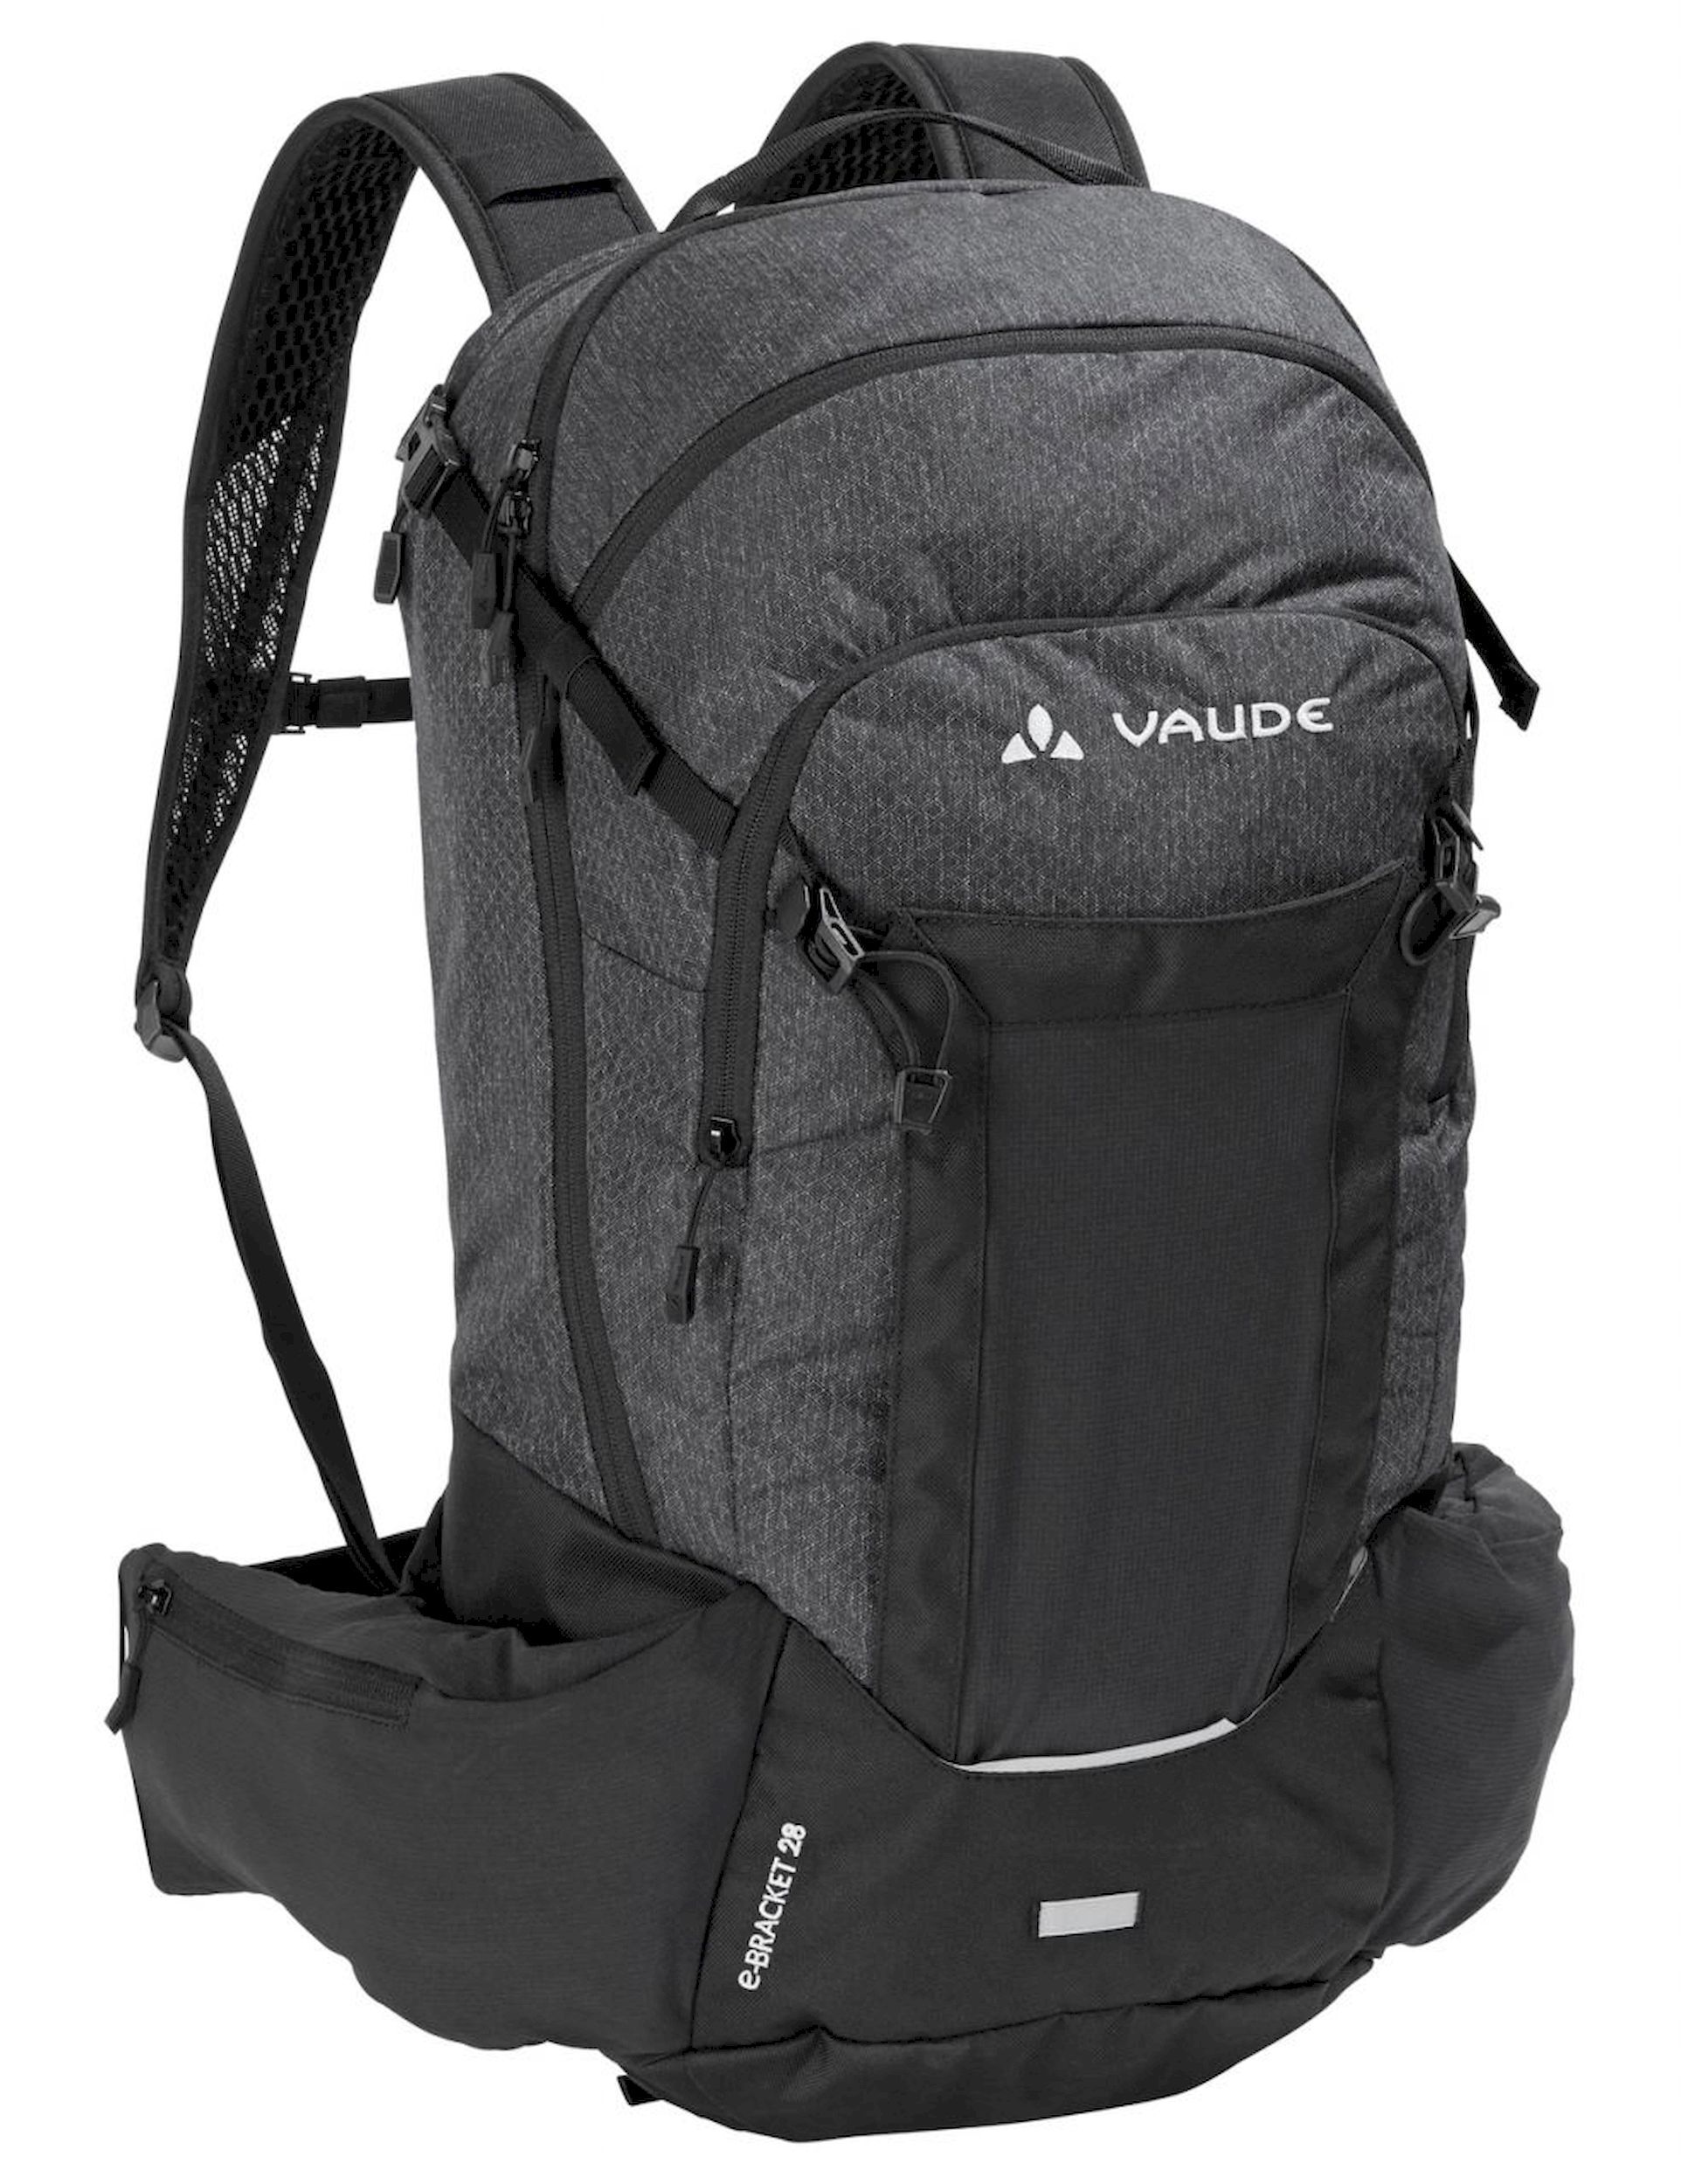 Vaude eBracket 28 - Travel backpack